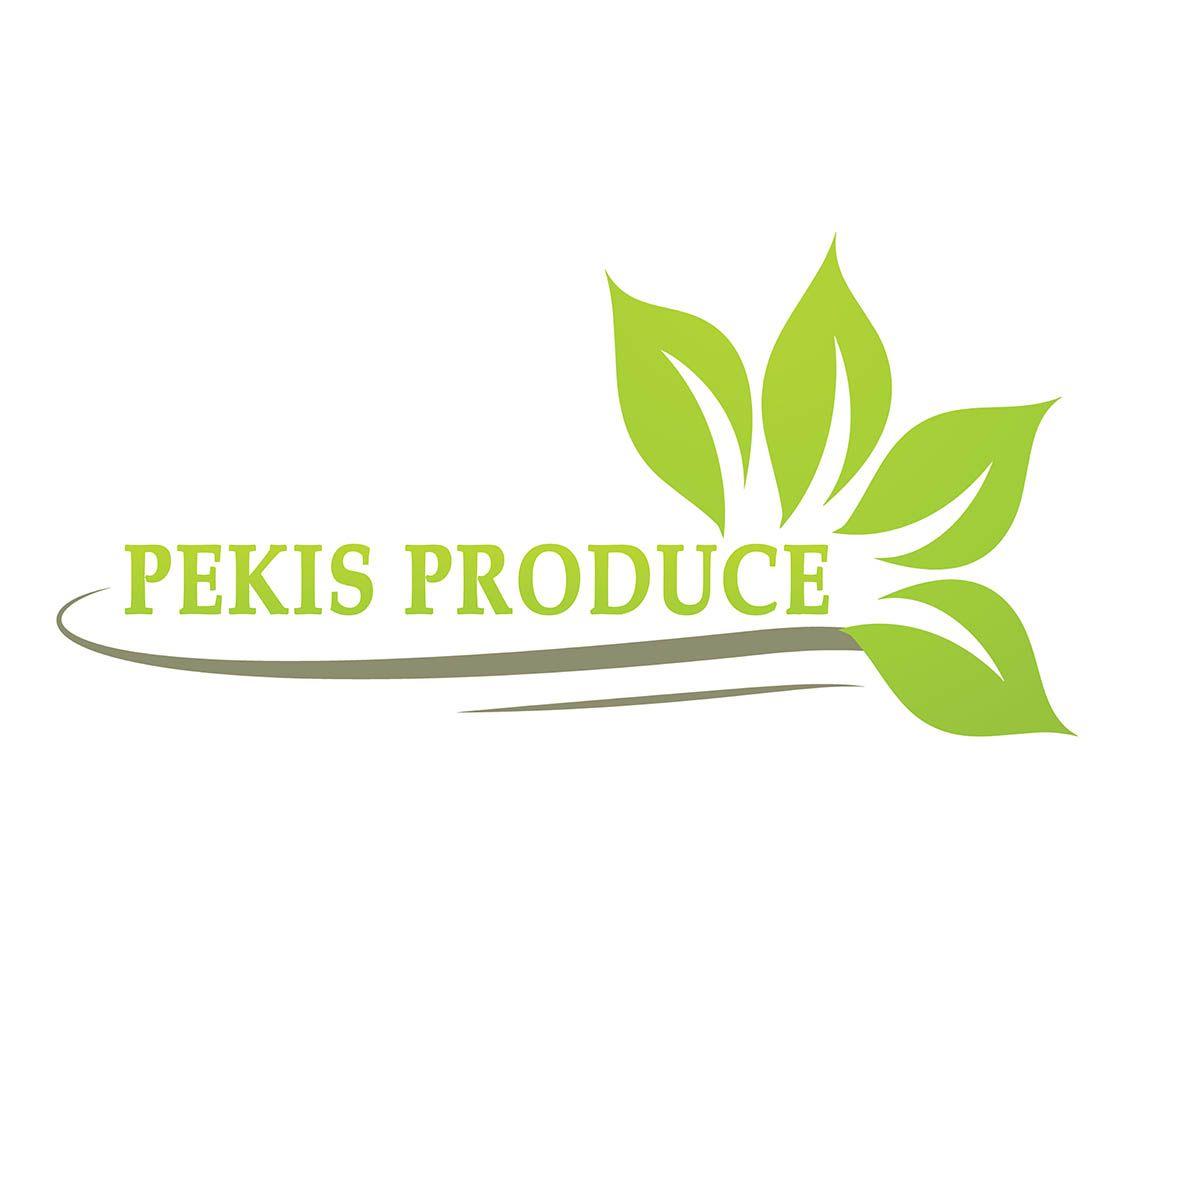 Produce Logo - Pekis Produce Logo Designed at Jasmai Media Solution Jasmai Media